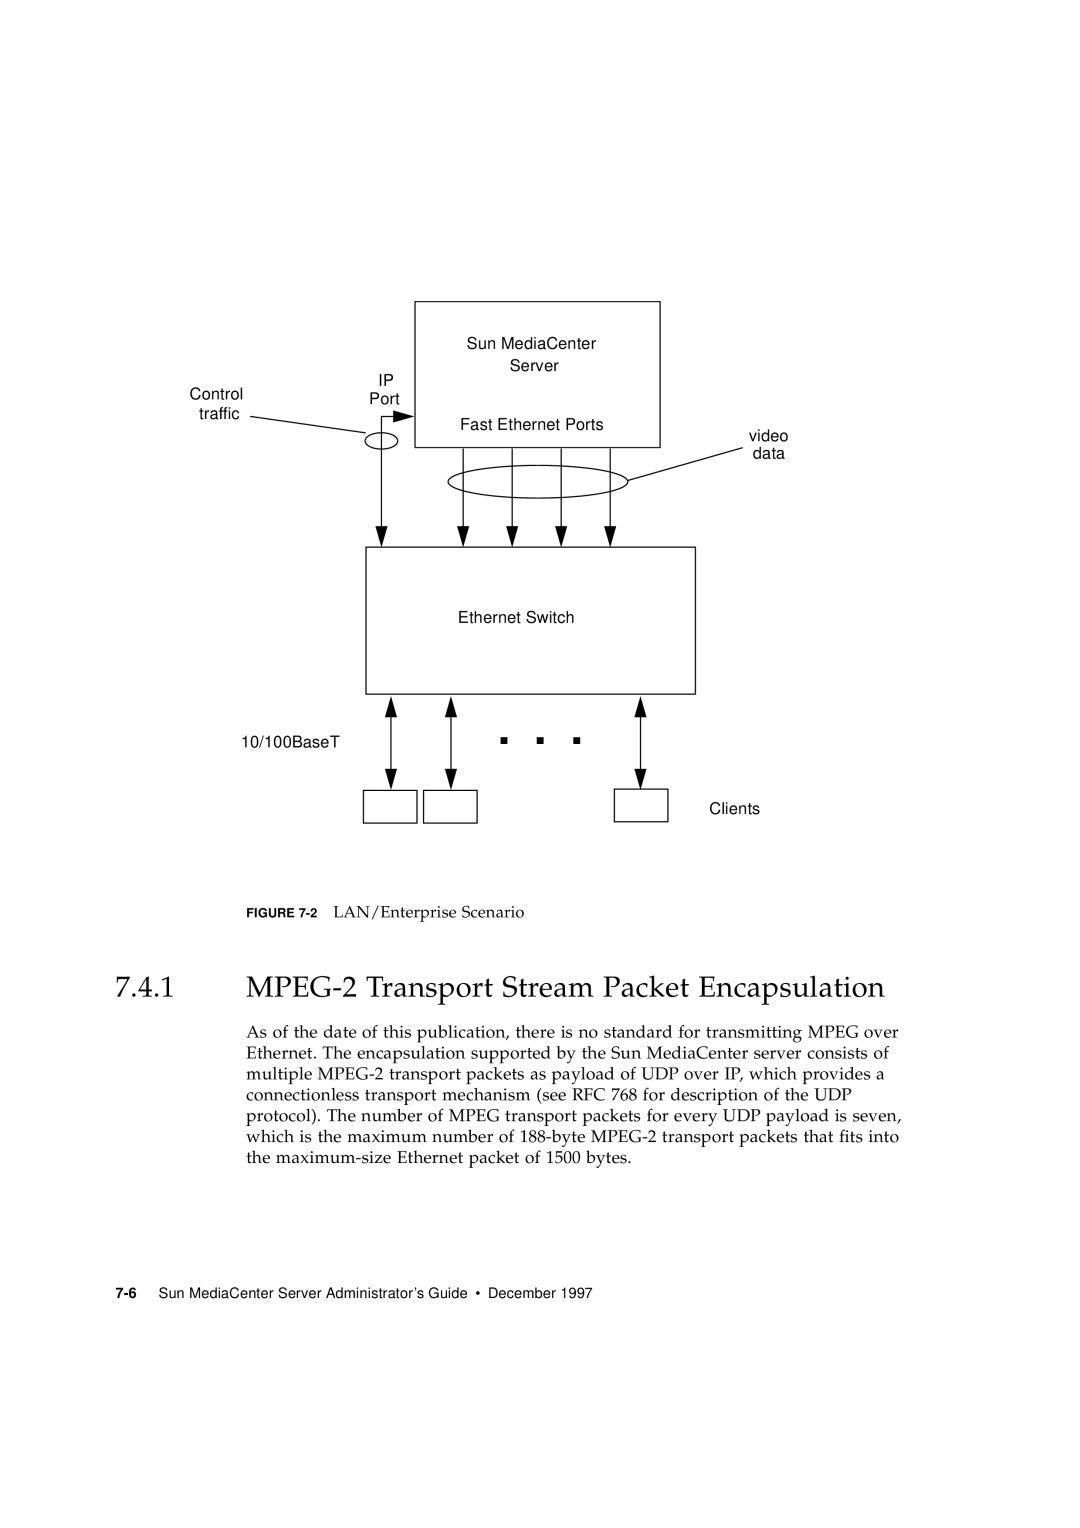 Sun Microsystems 2.1 manual MPEG-2 Transport Stream Packet Encapsulation, 2 LAN/Enterprise Scenario 